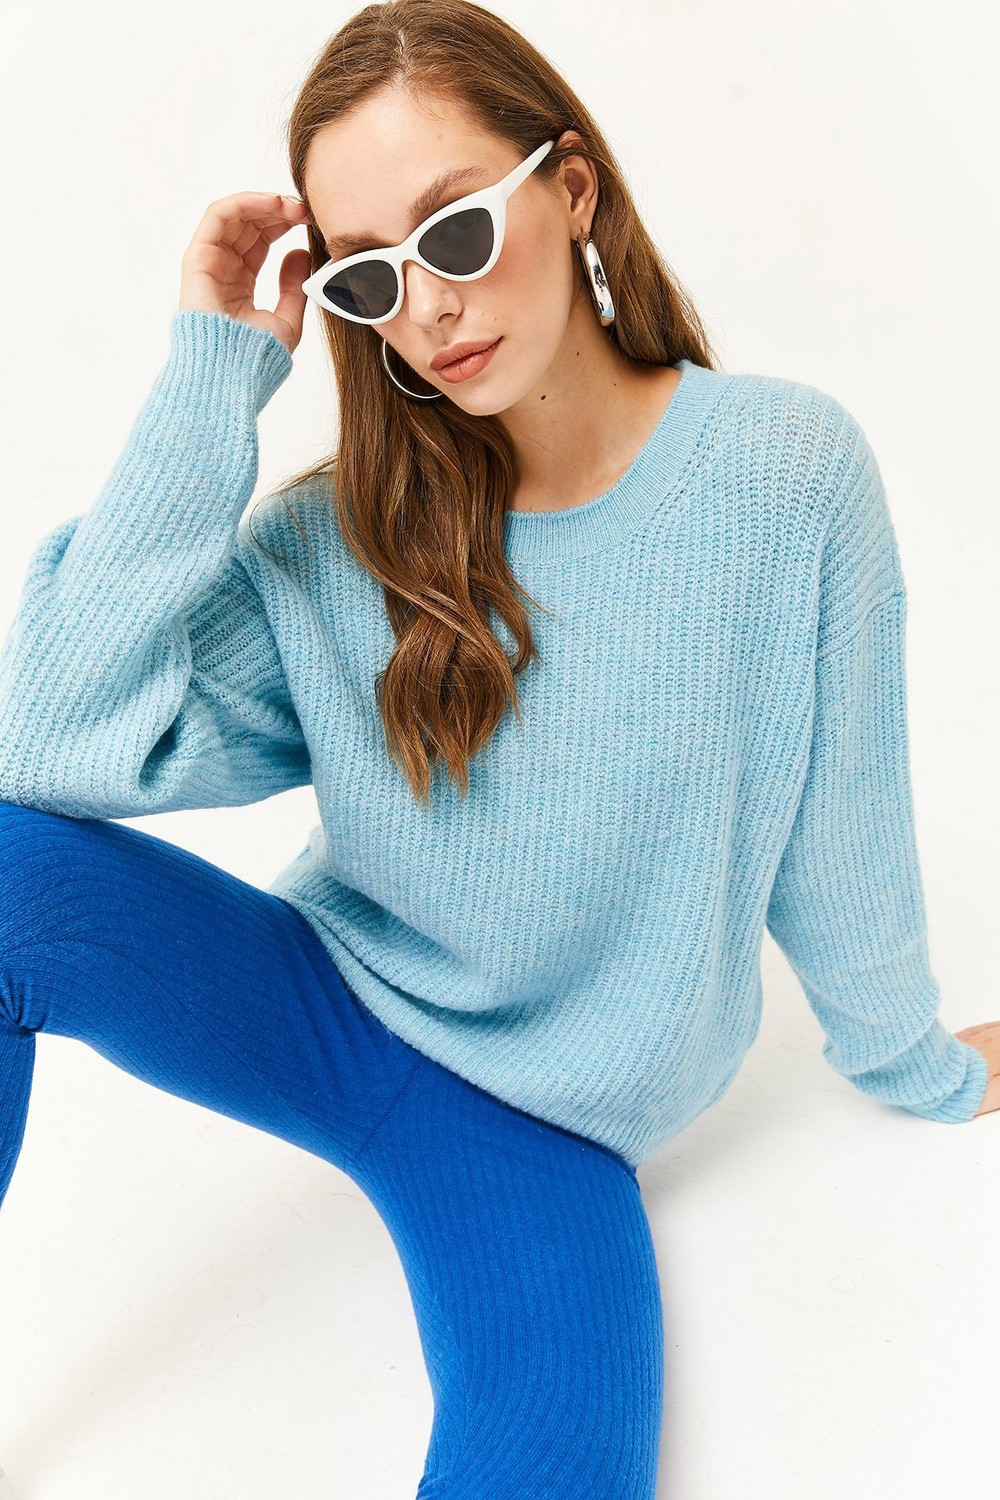 Olalook Women's Baby Blue Crew Neck Soft Textured Knitwear Sweater